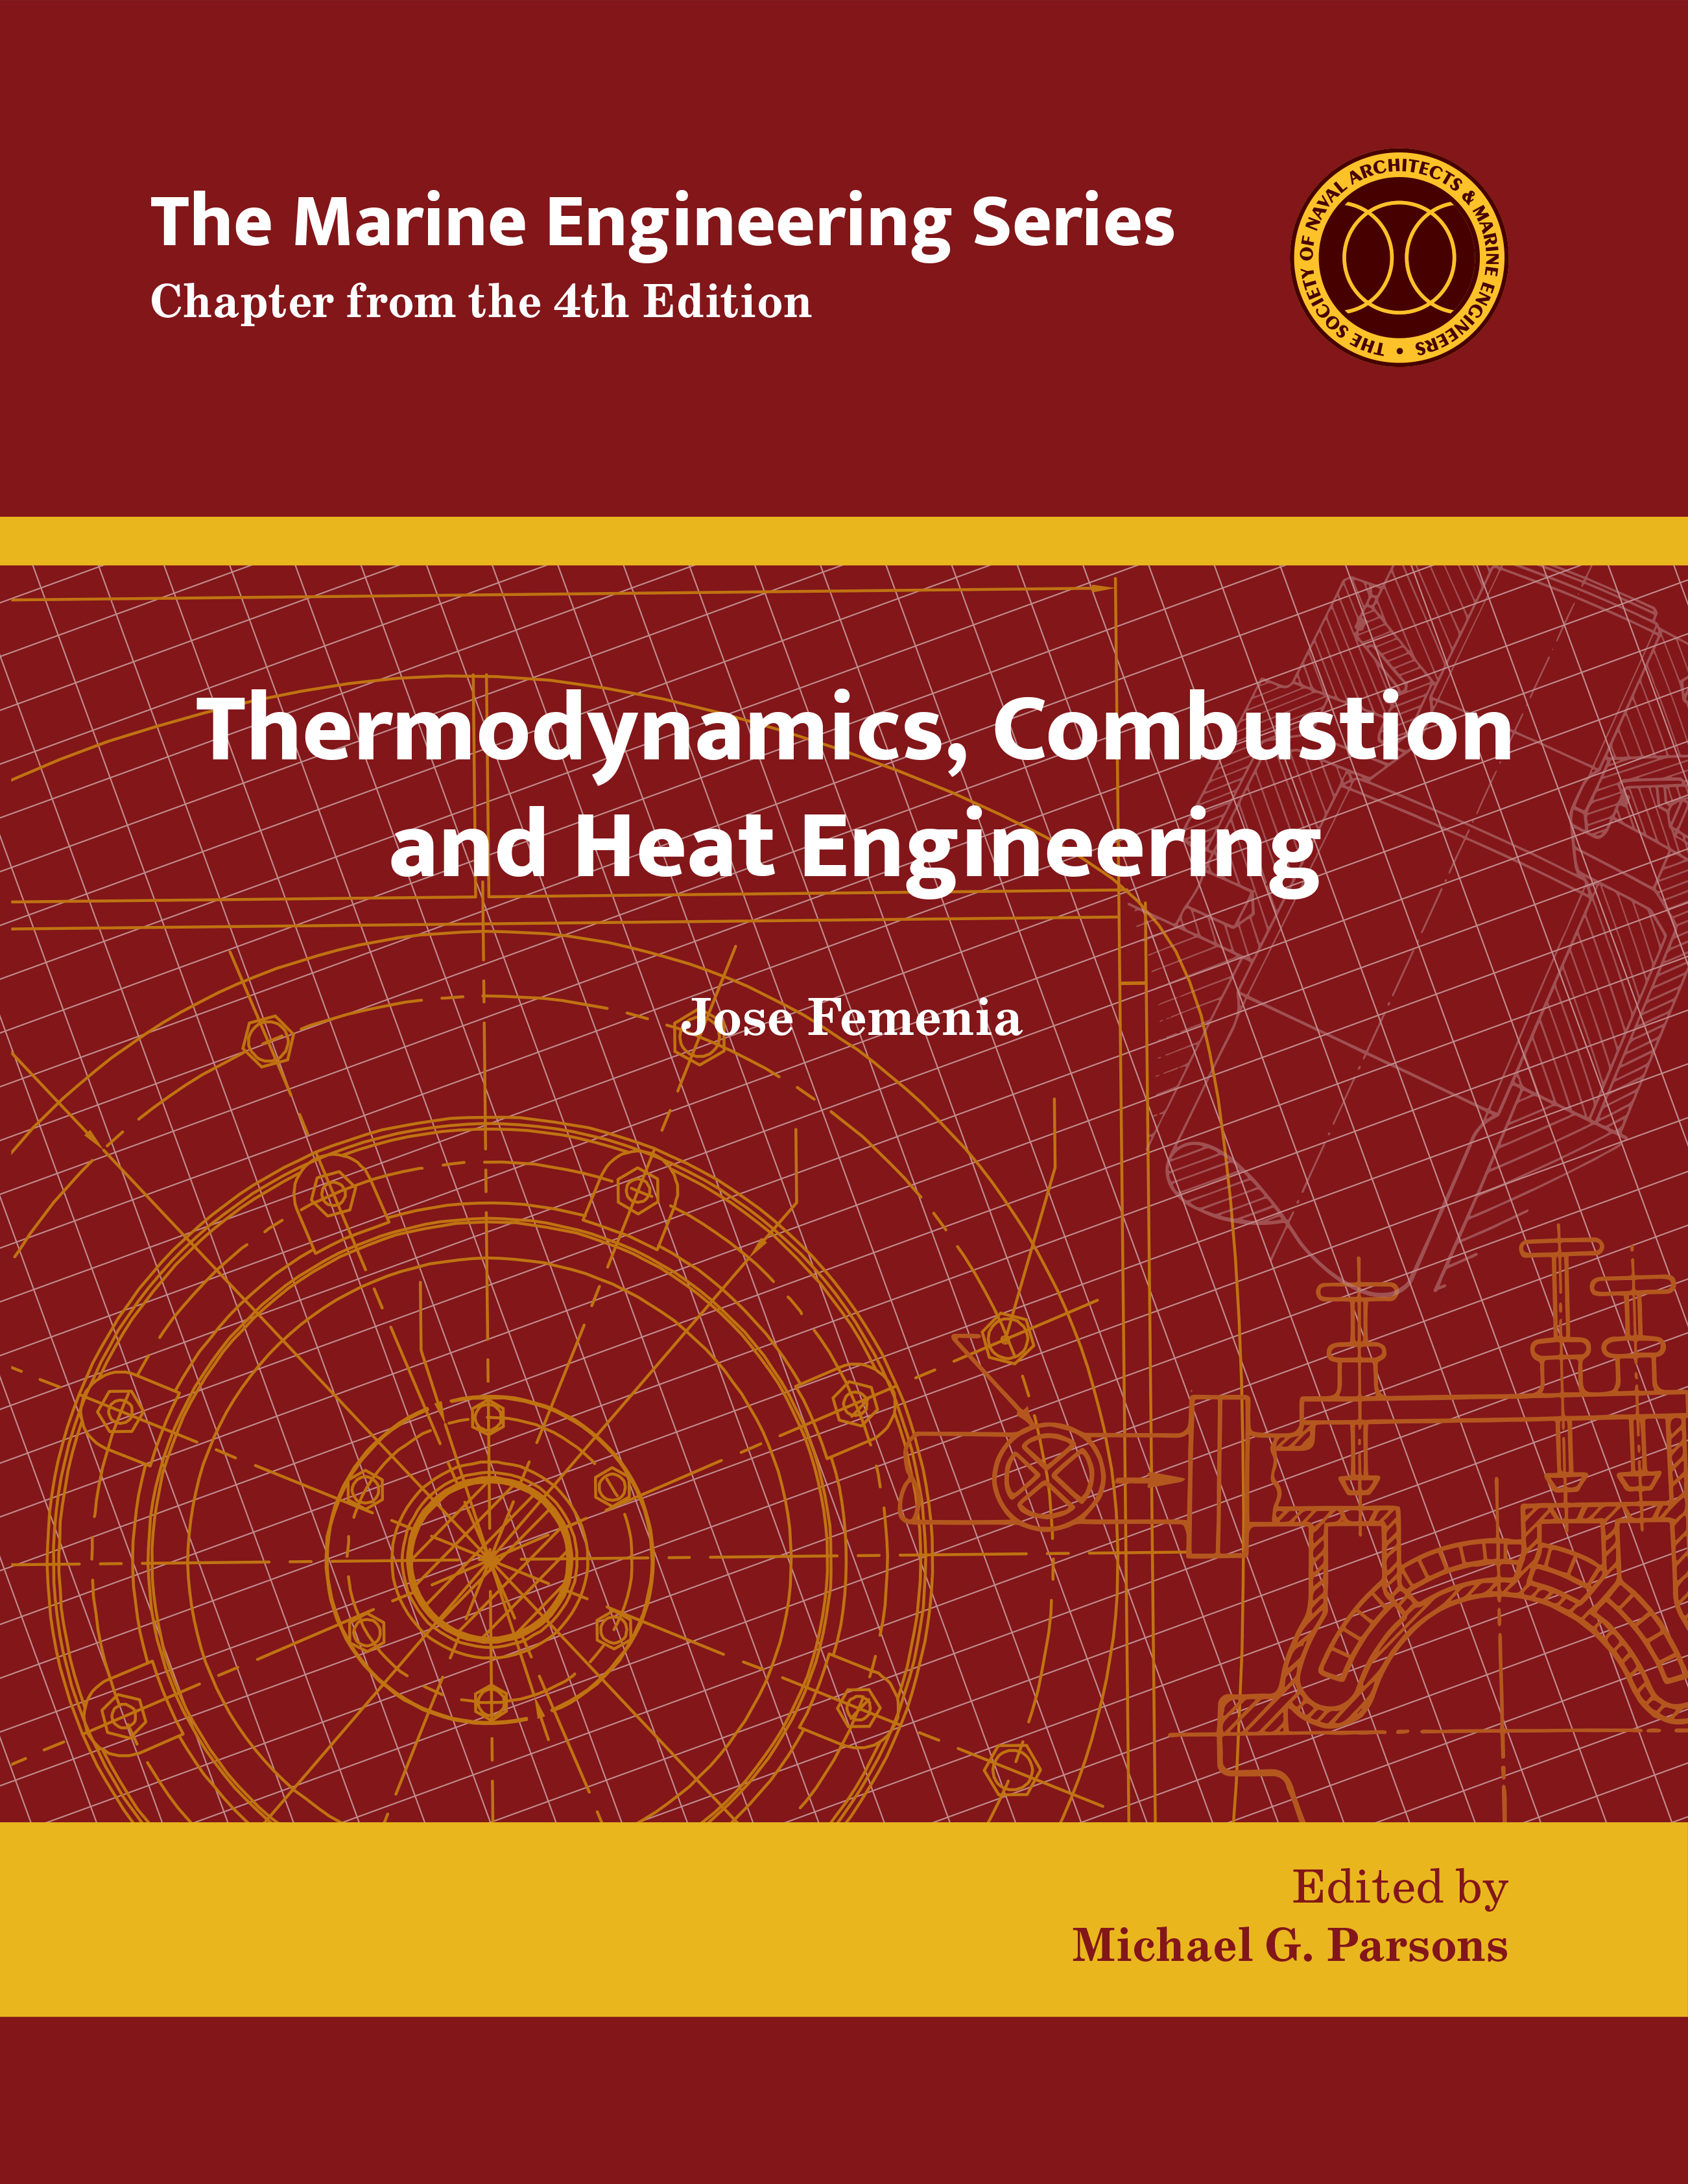 Marine Engineering Series: Thermodynamics, Combustion and Heat Engineering